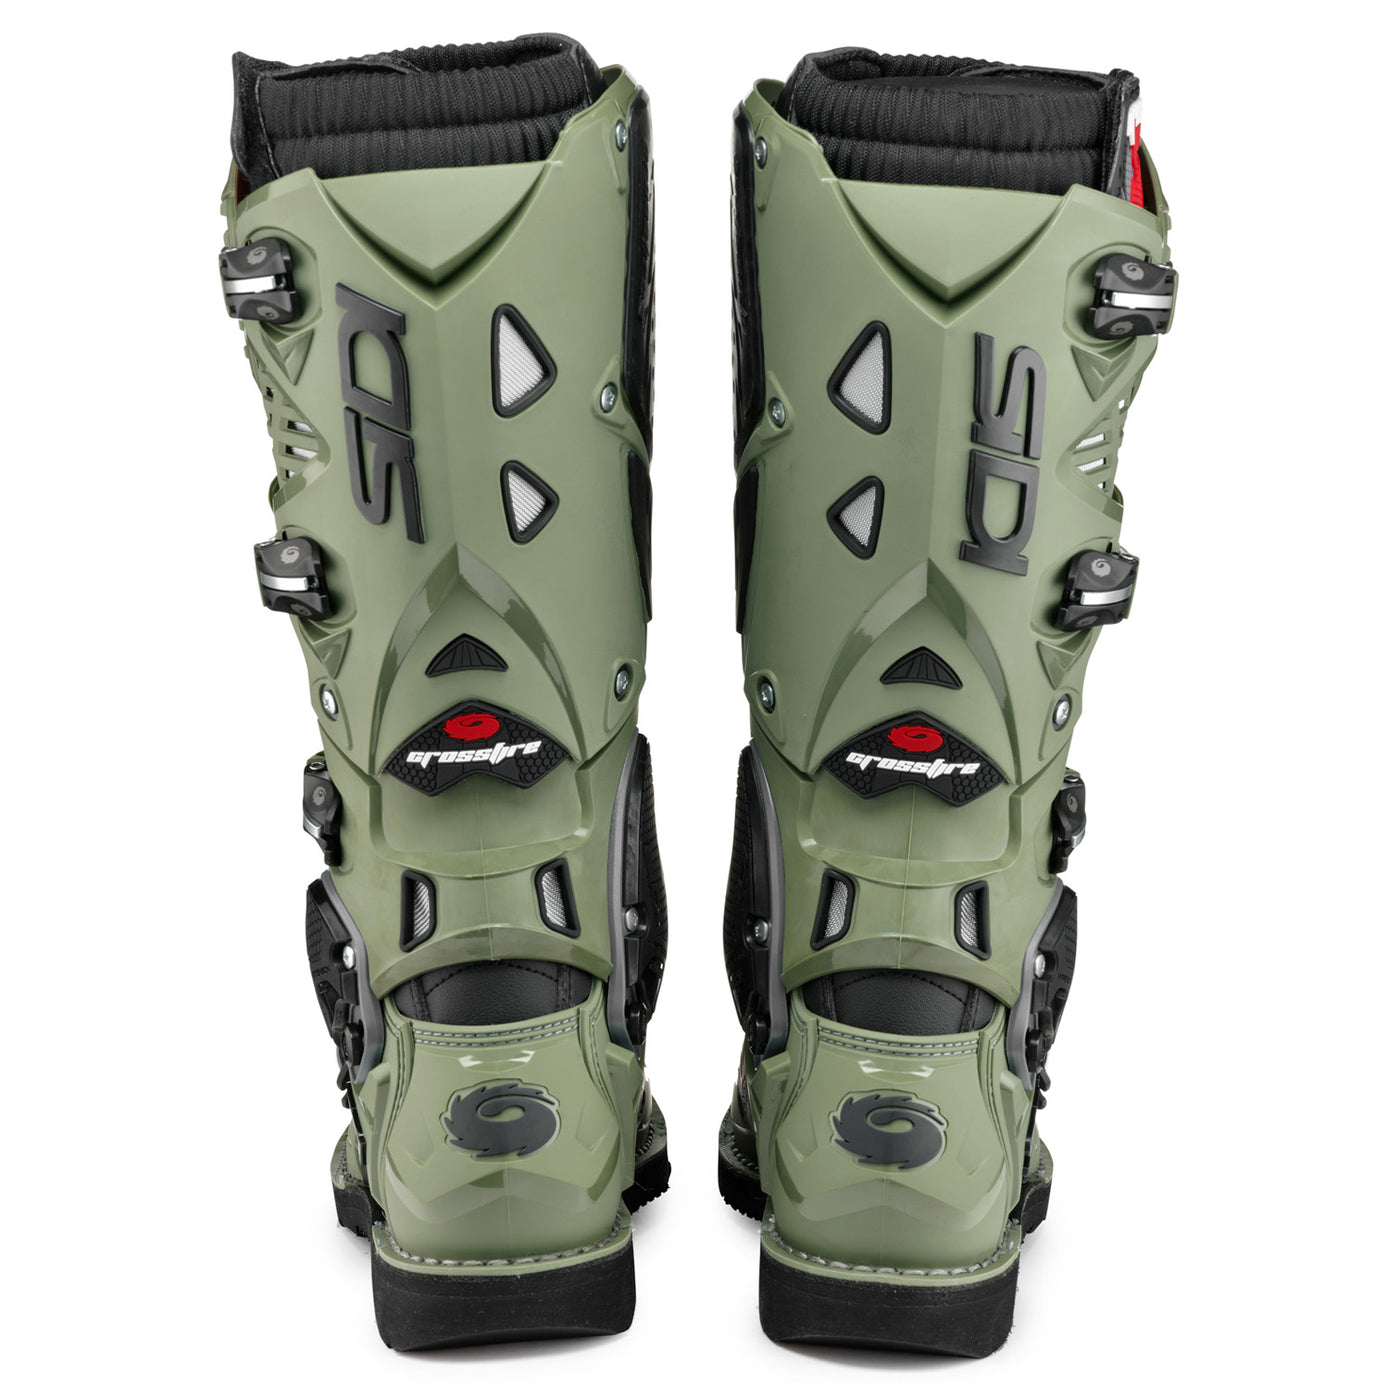 Sidi Crossfire 3 SRS Boots